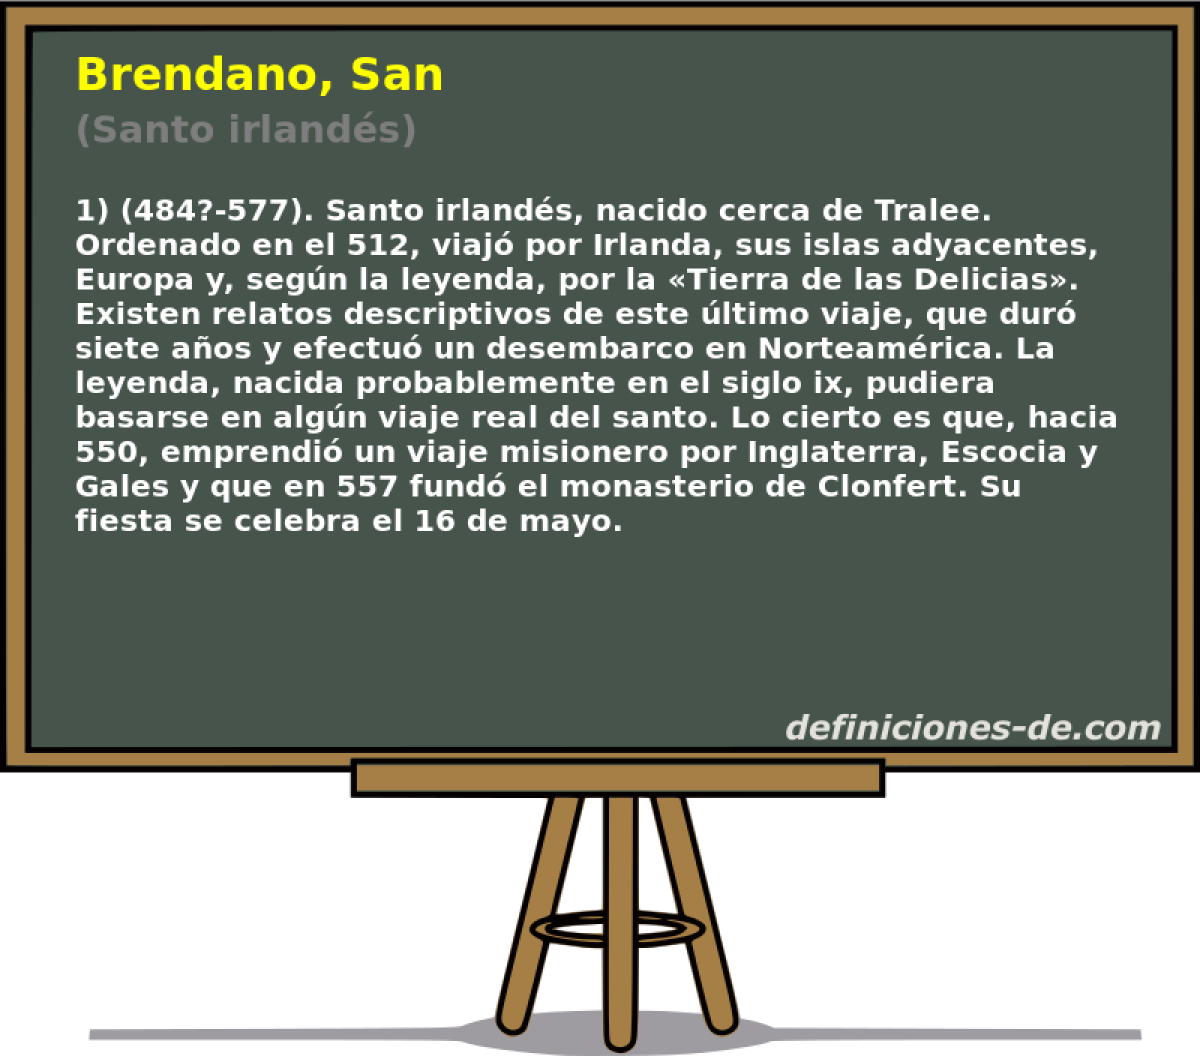 Brendano, San (Santo irlands)